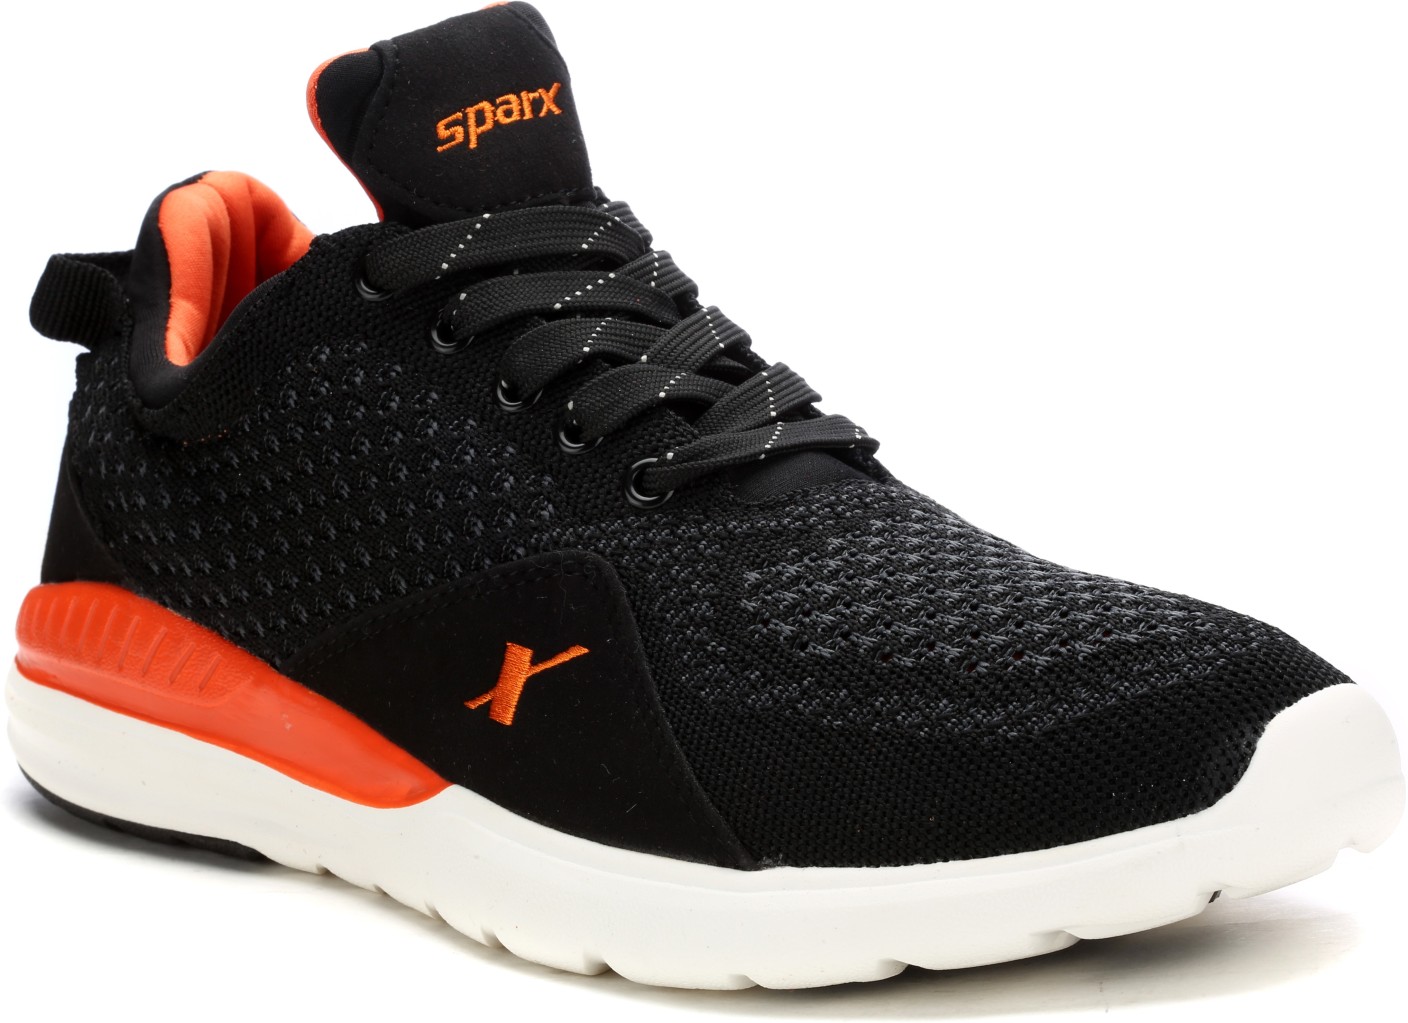 Sparx 266 Running Shoes  For Men Buy Sparx 266 Running Shoes  For Men Online at Best Price 